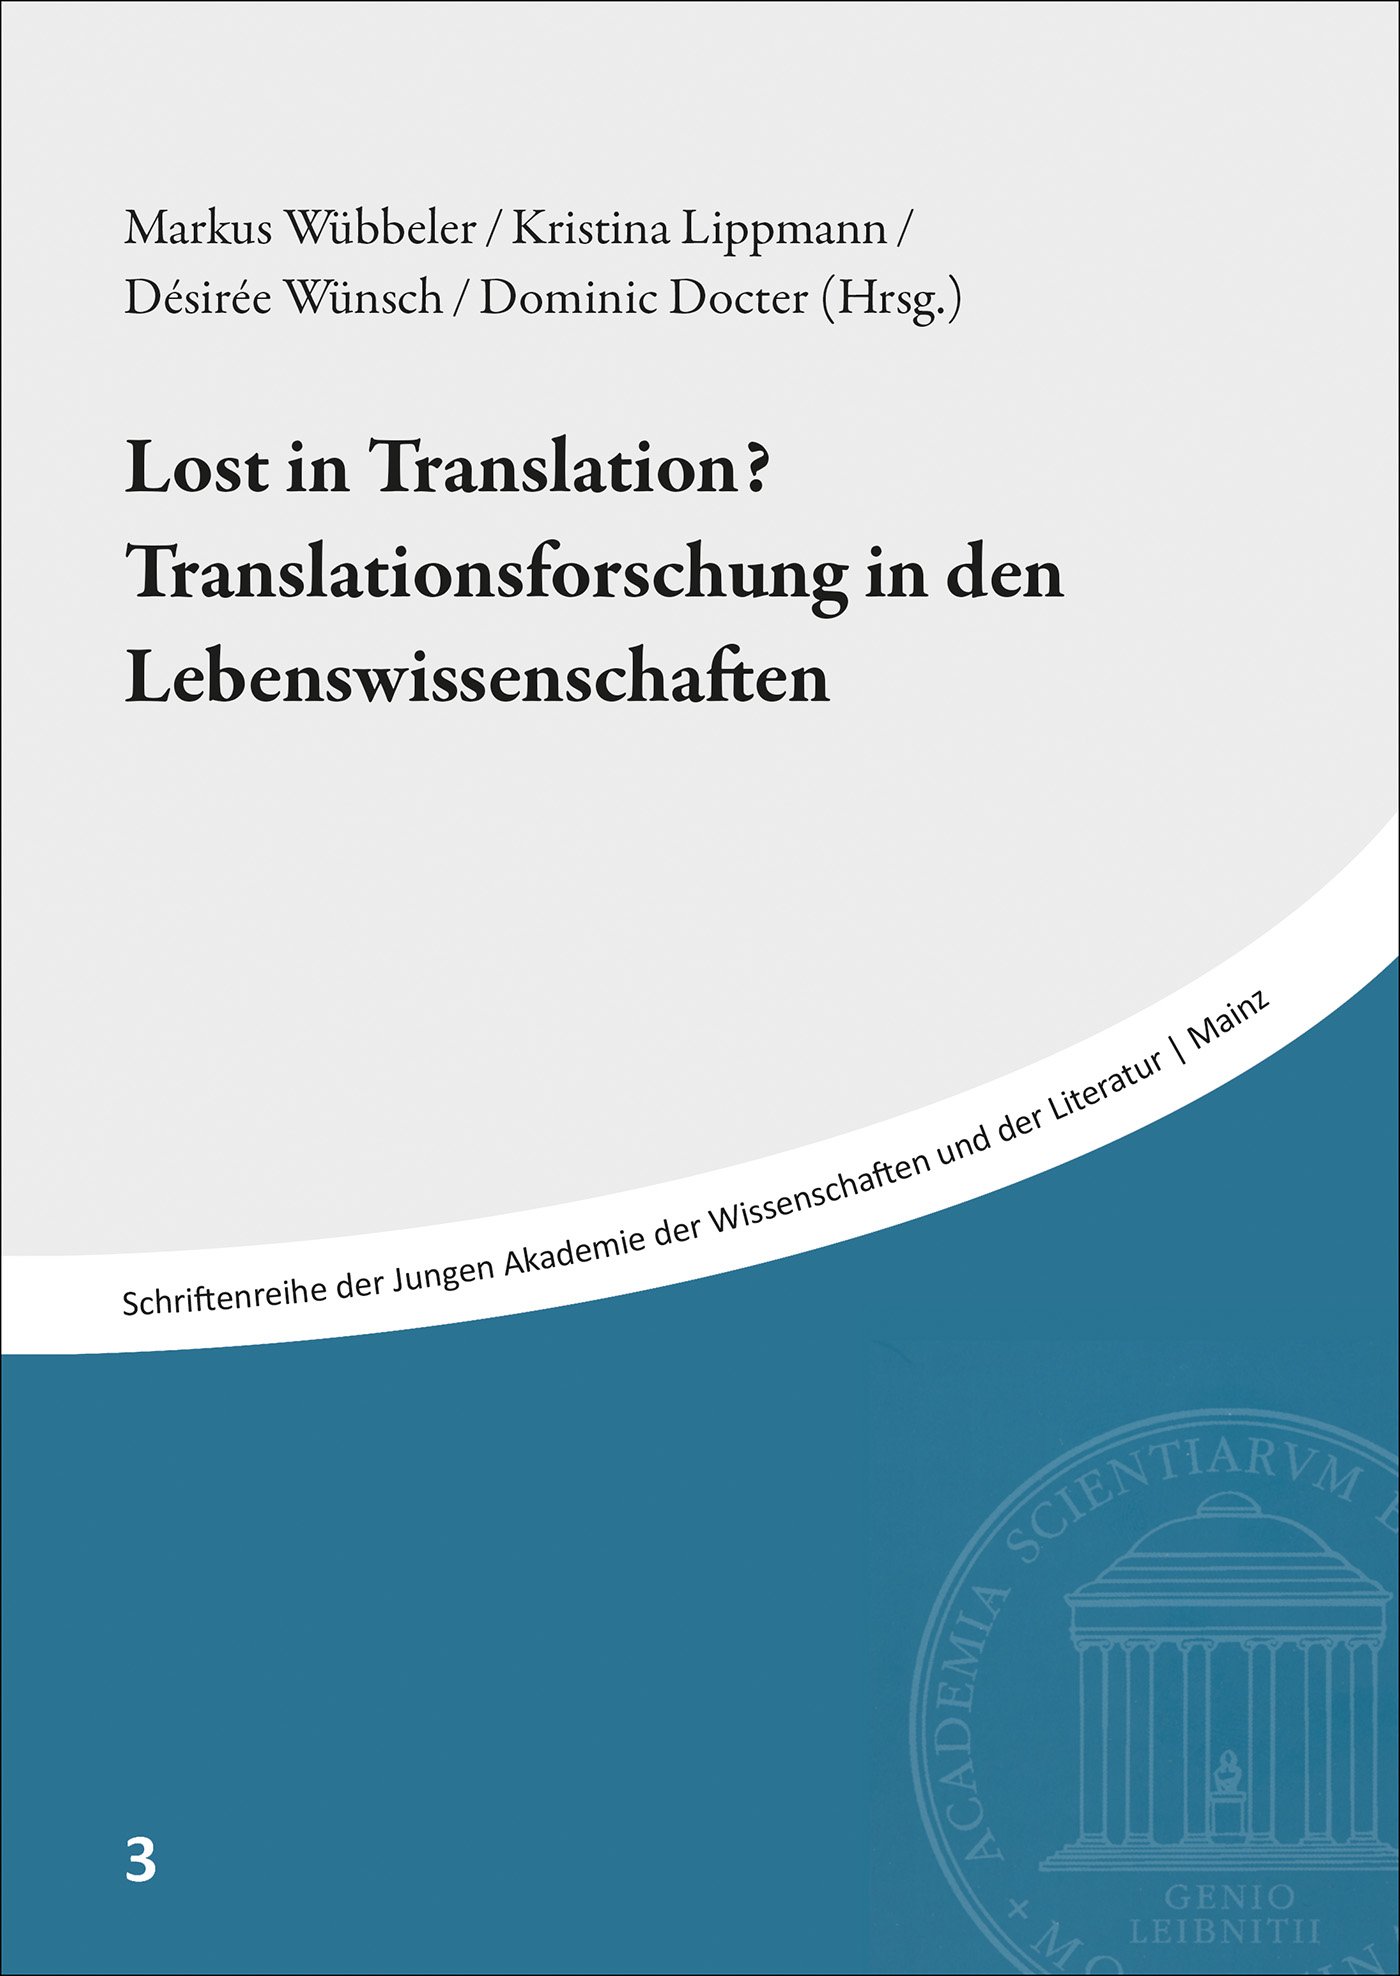 Lost in Translation? Translationsforschung in den Lebenswissenschaften